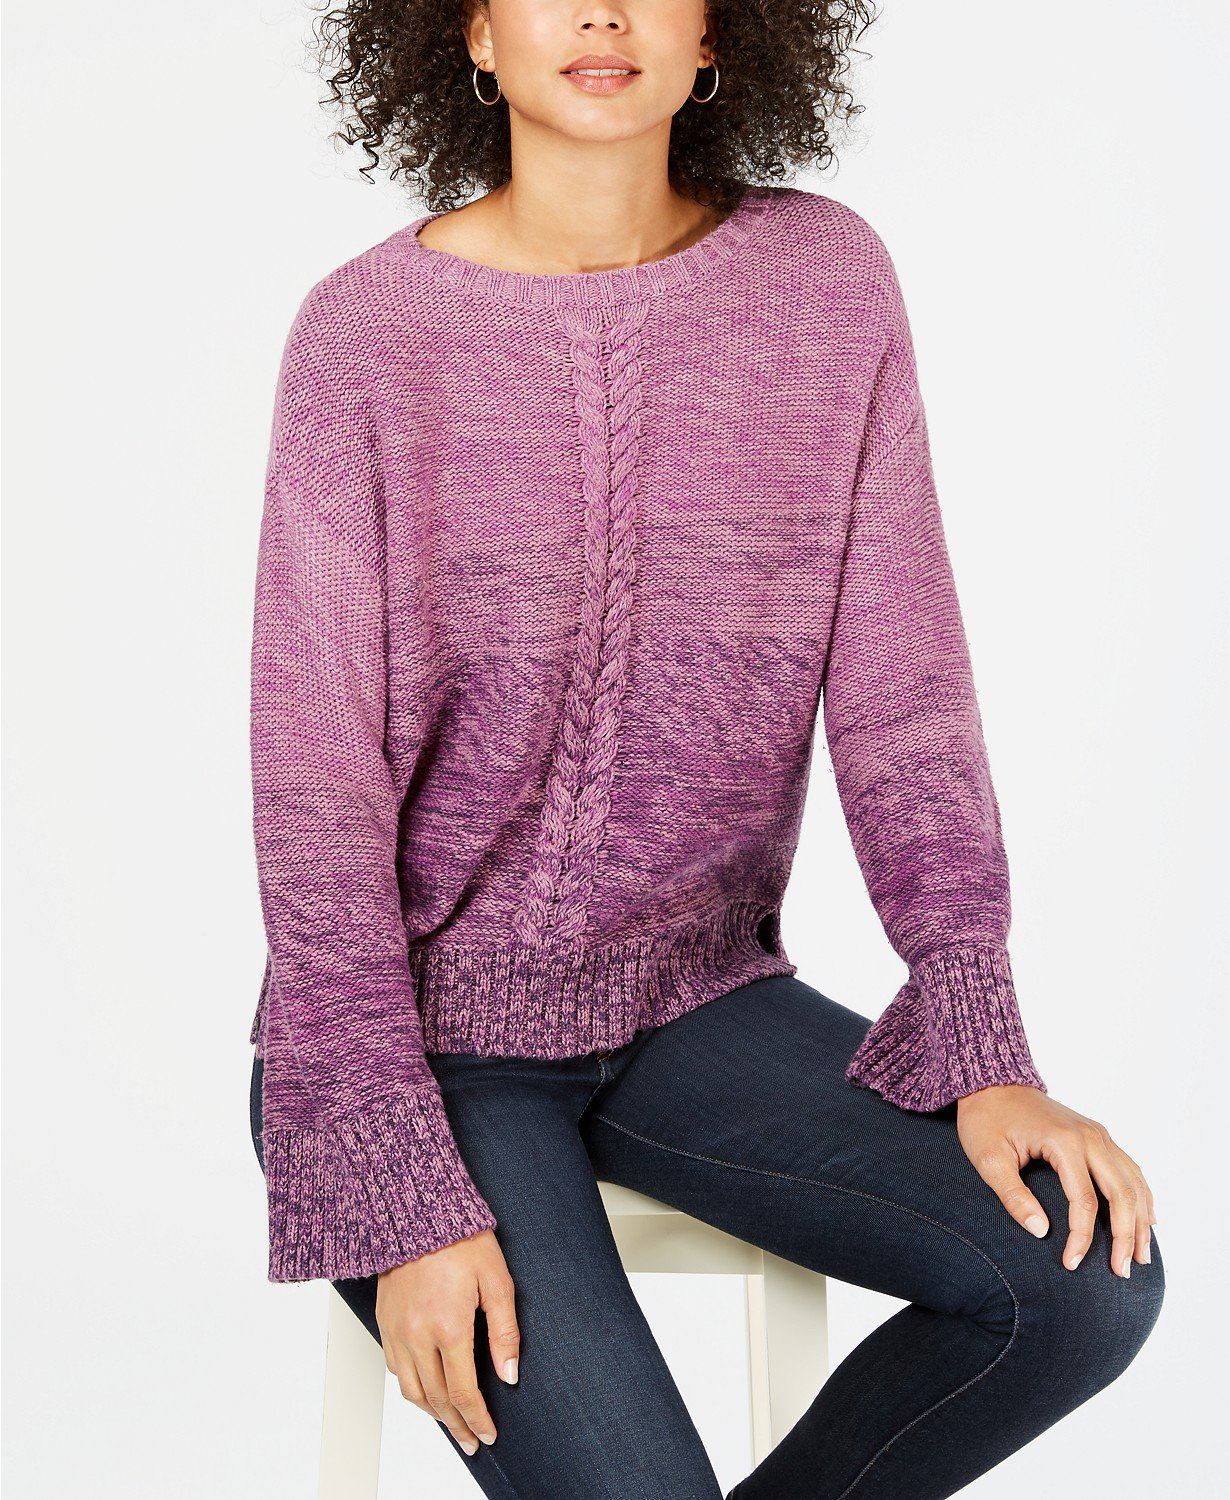 Style & Co Sweater Marl Braid Pullover Purple M | eBay